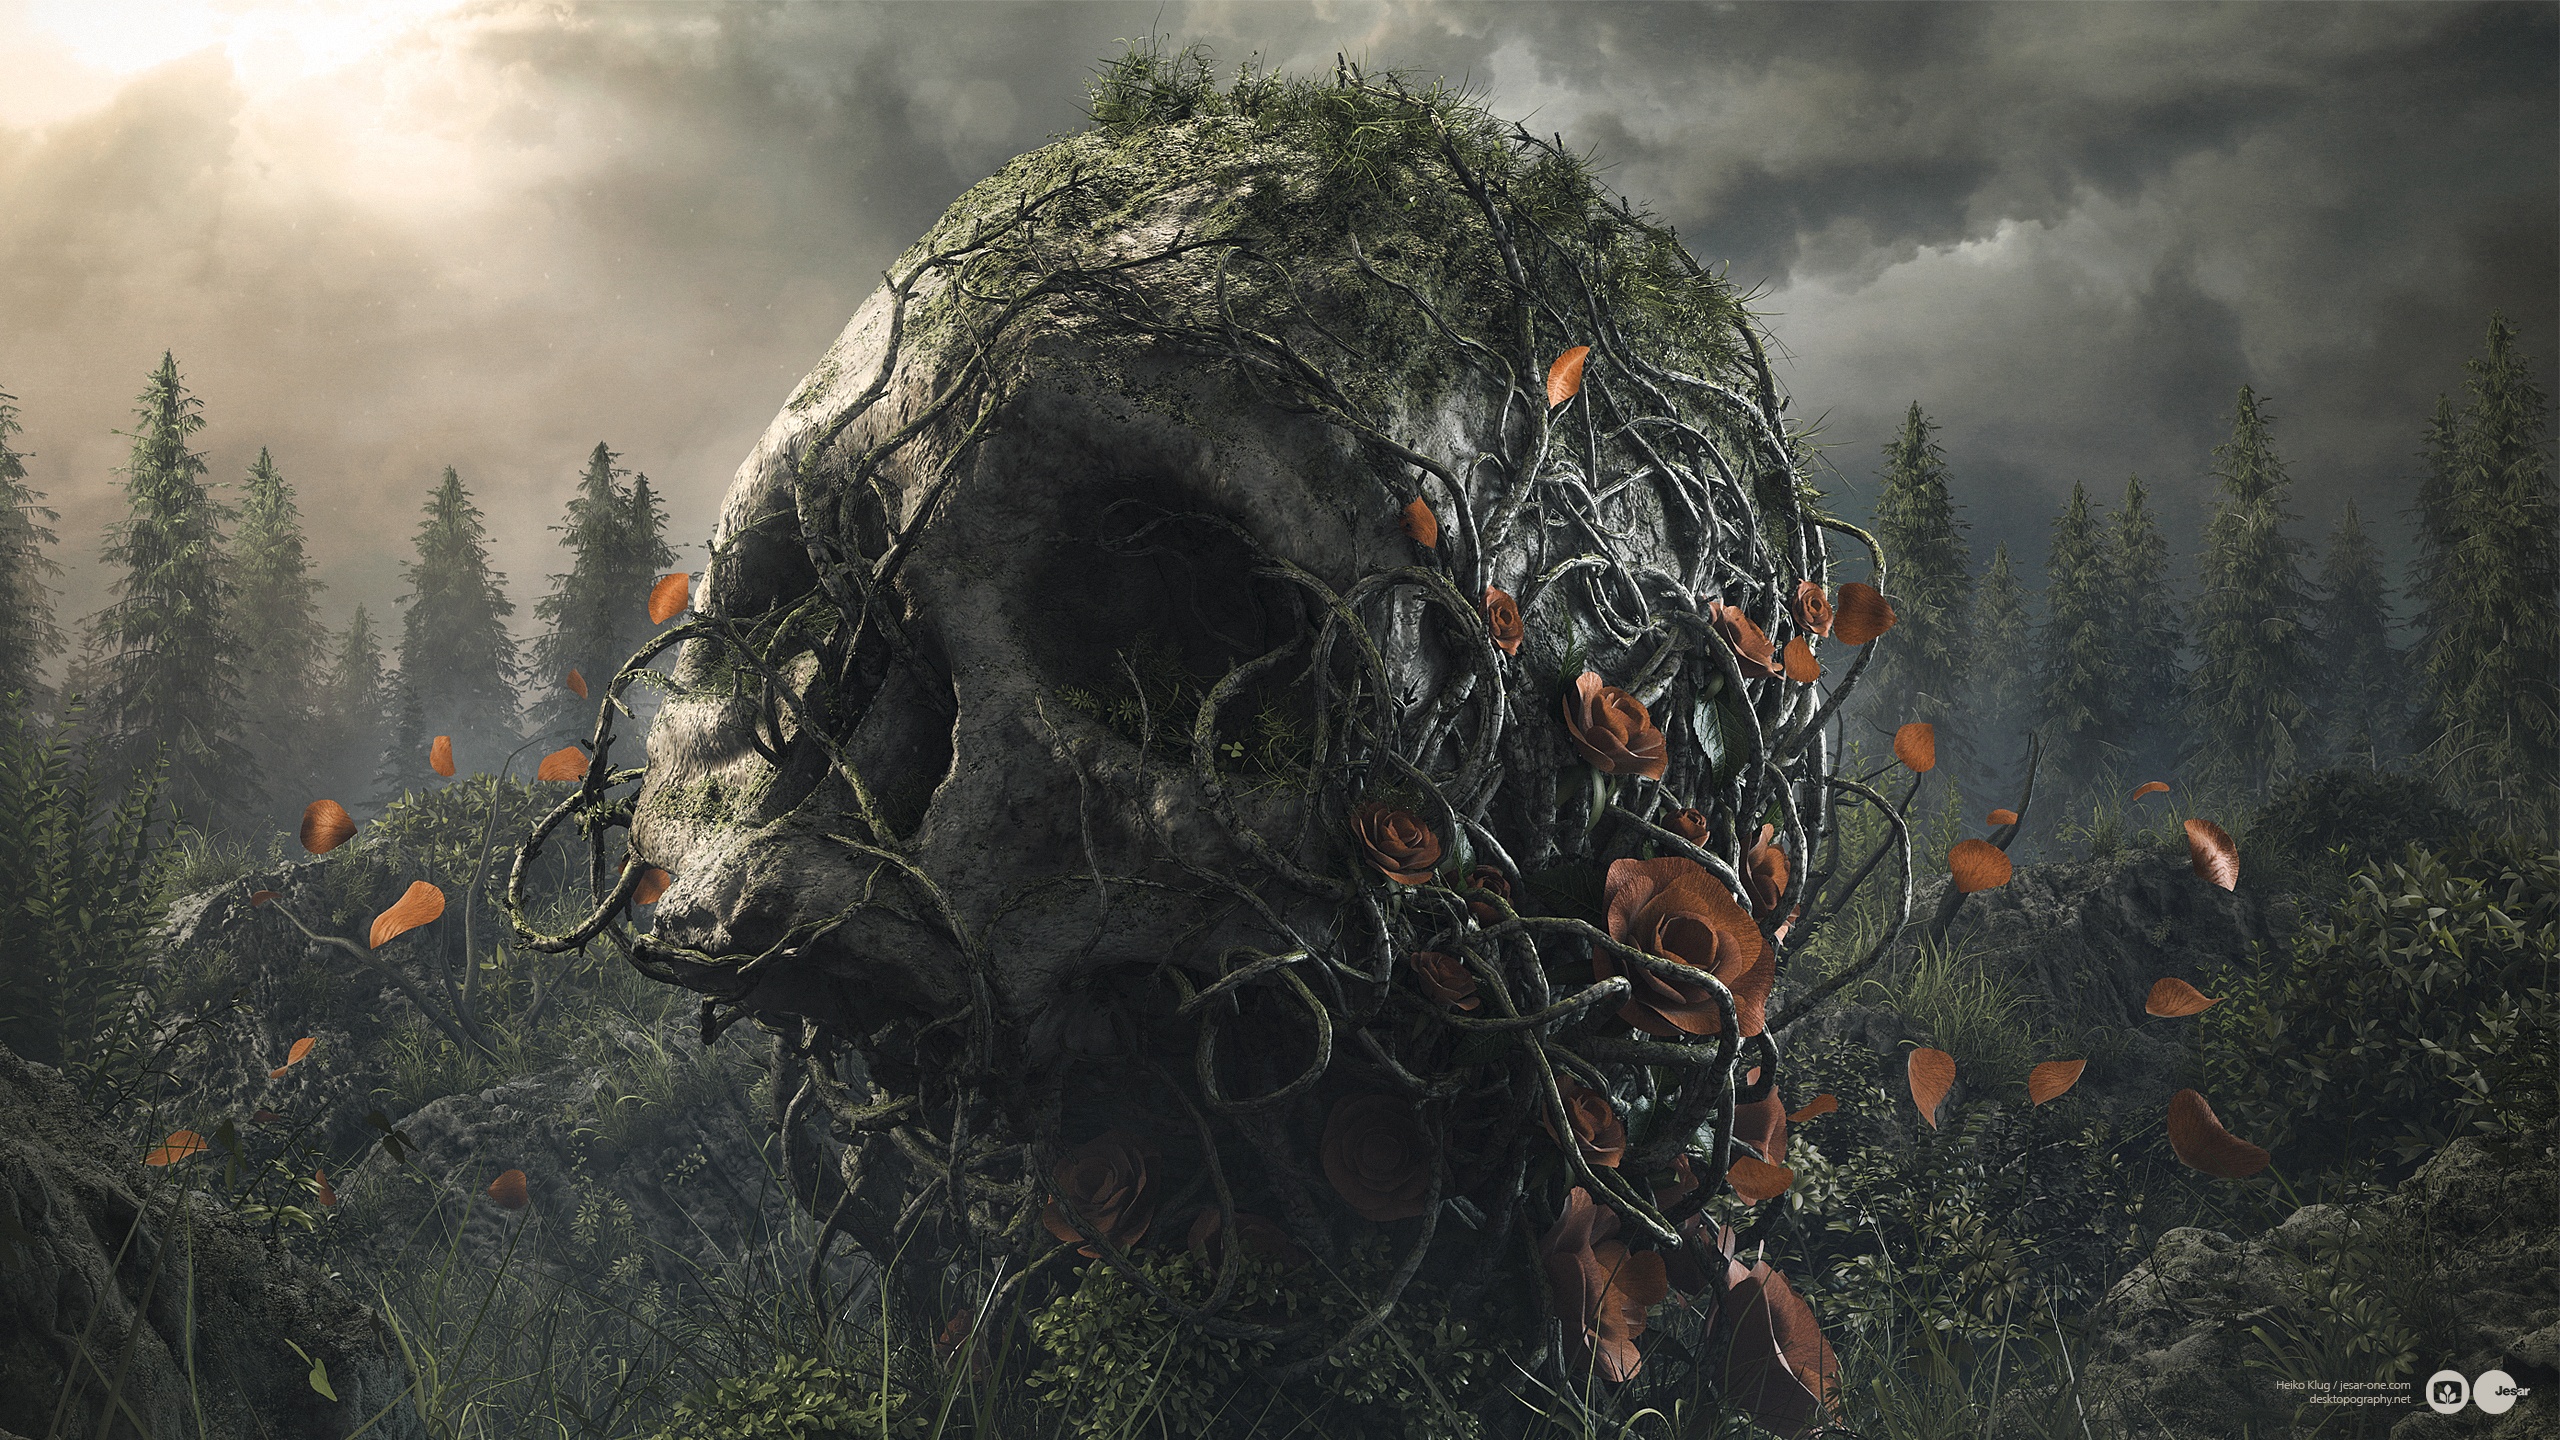 Skull overgrown with vines by Heiko Klug